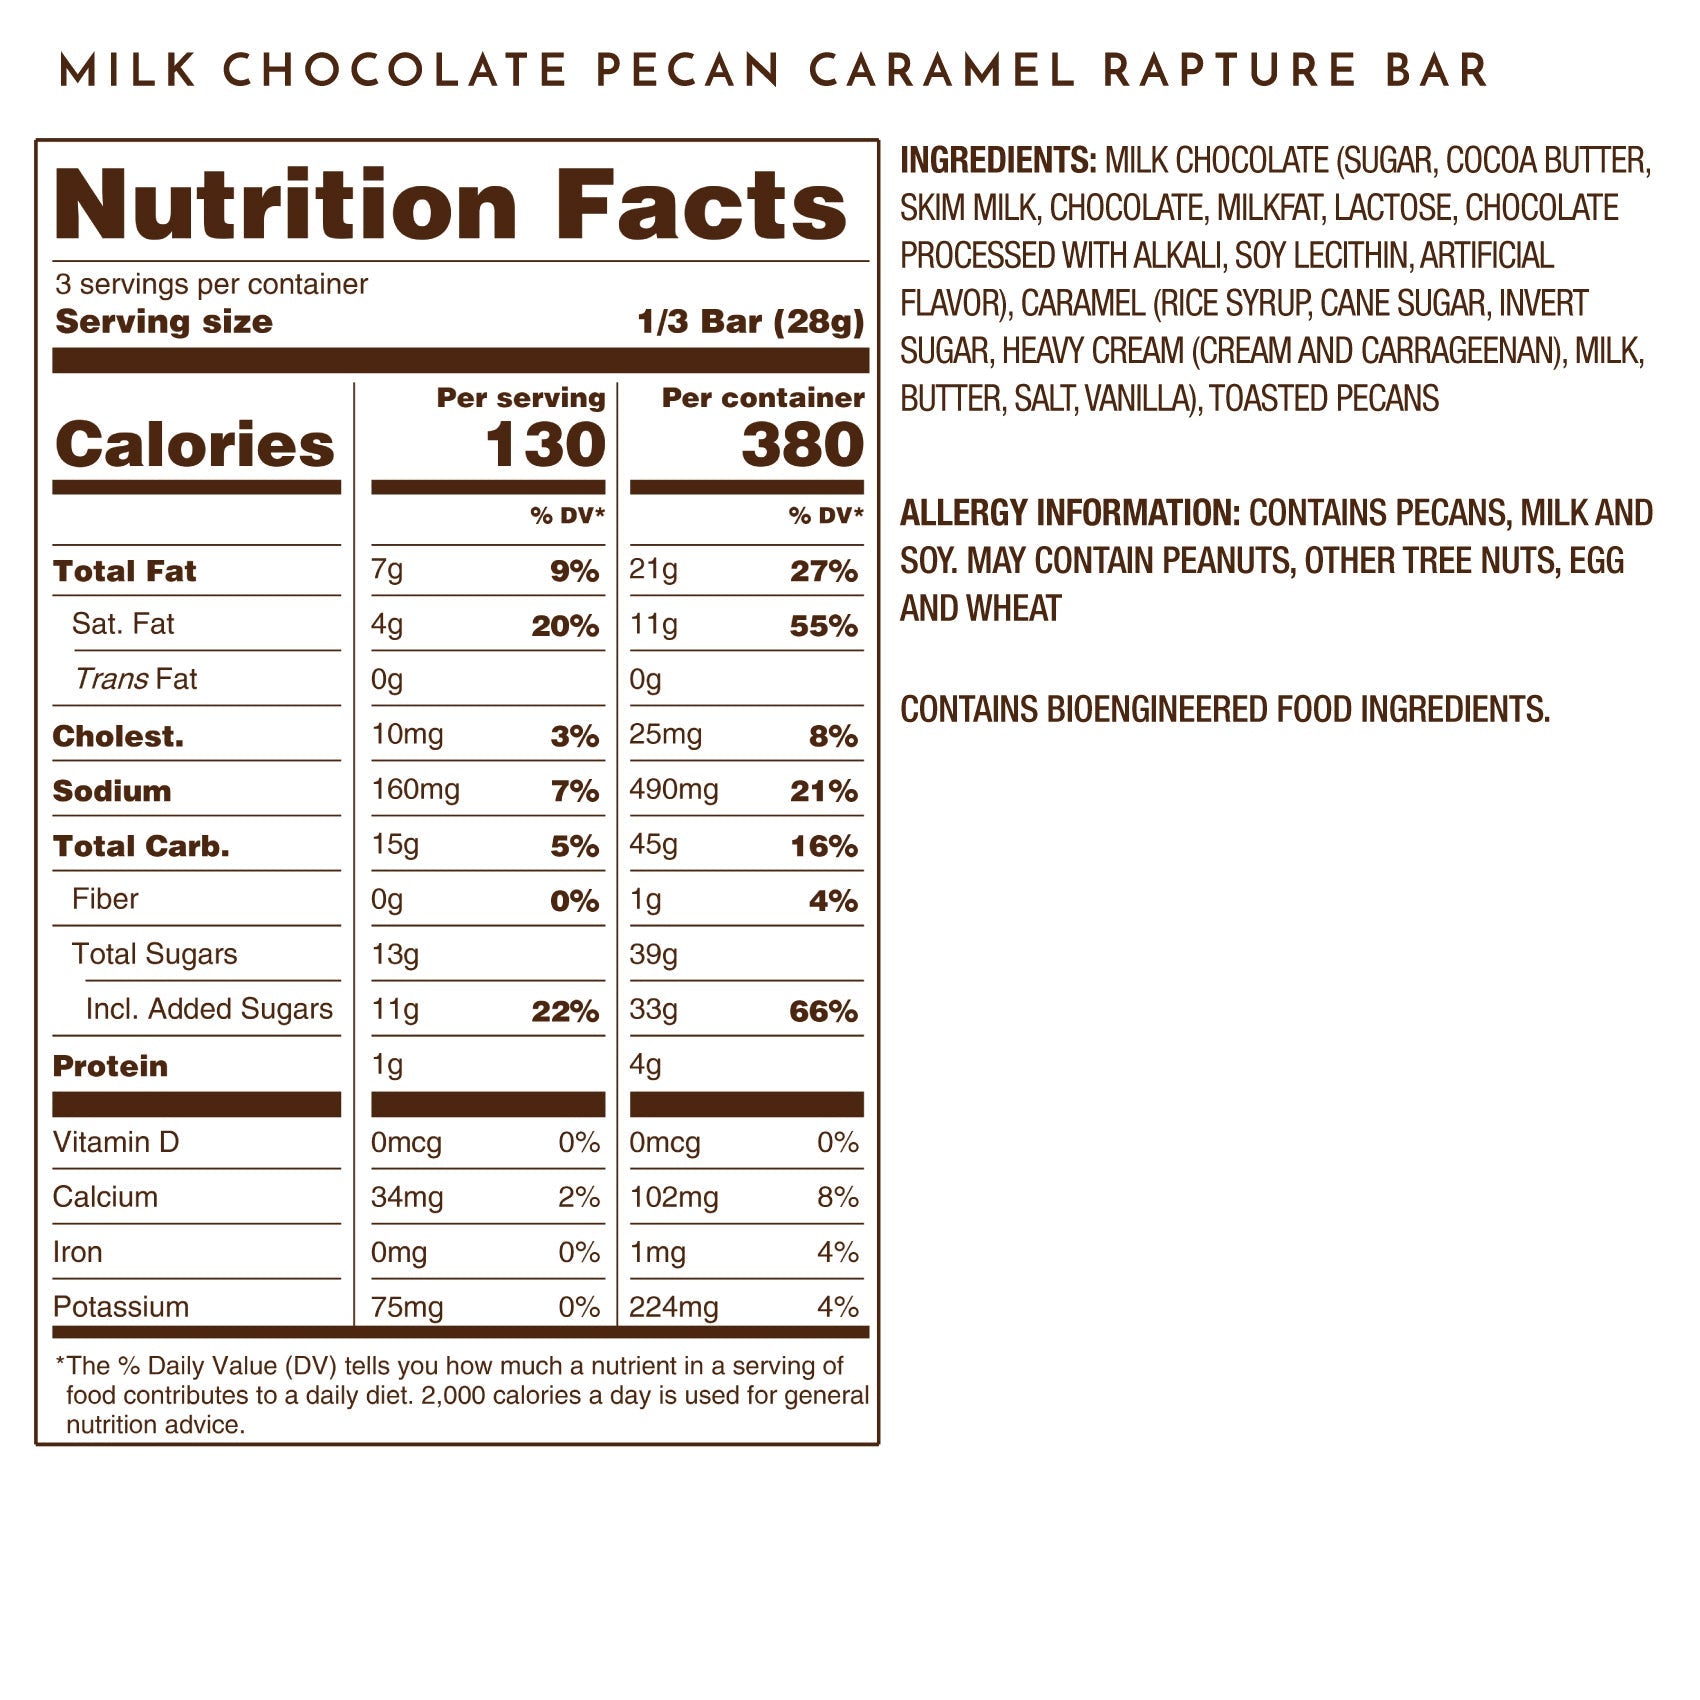 Pecan Caramel Rapture Milk Chocolate Tablet Bar Nutrition Facts